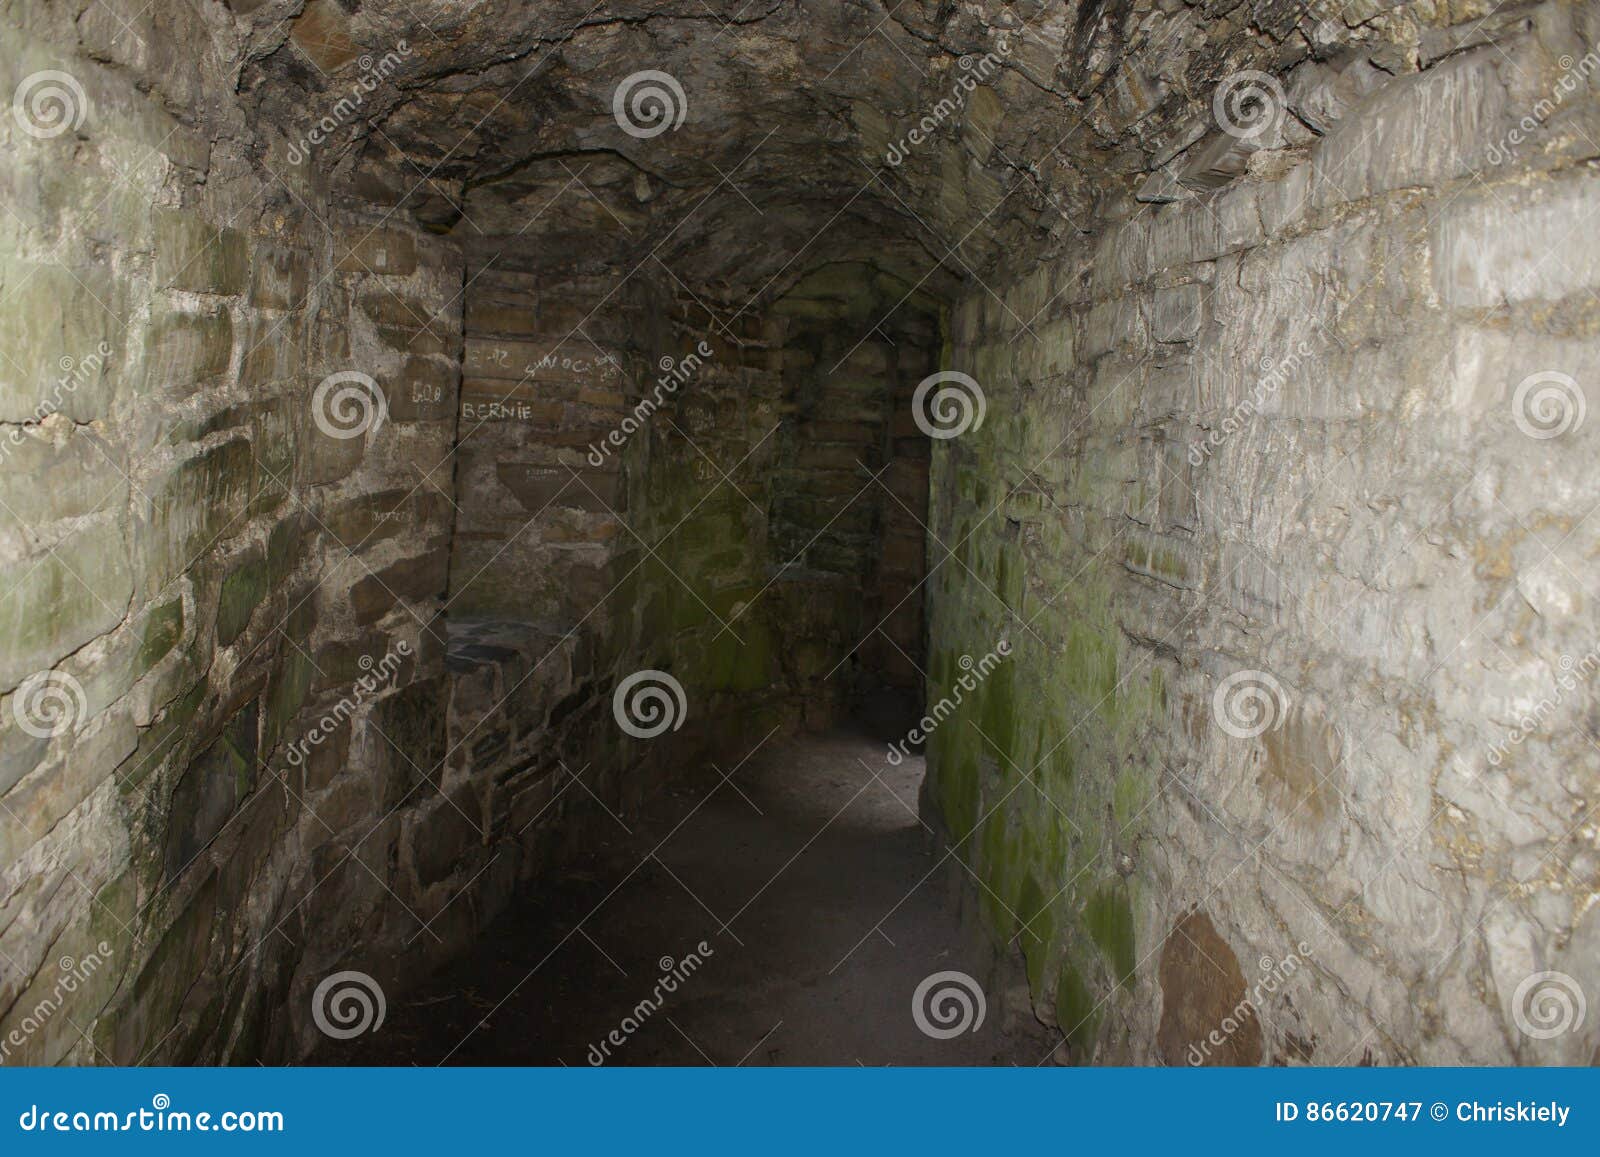 trim castle tunnel